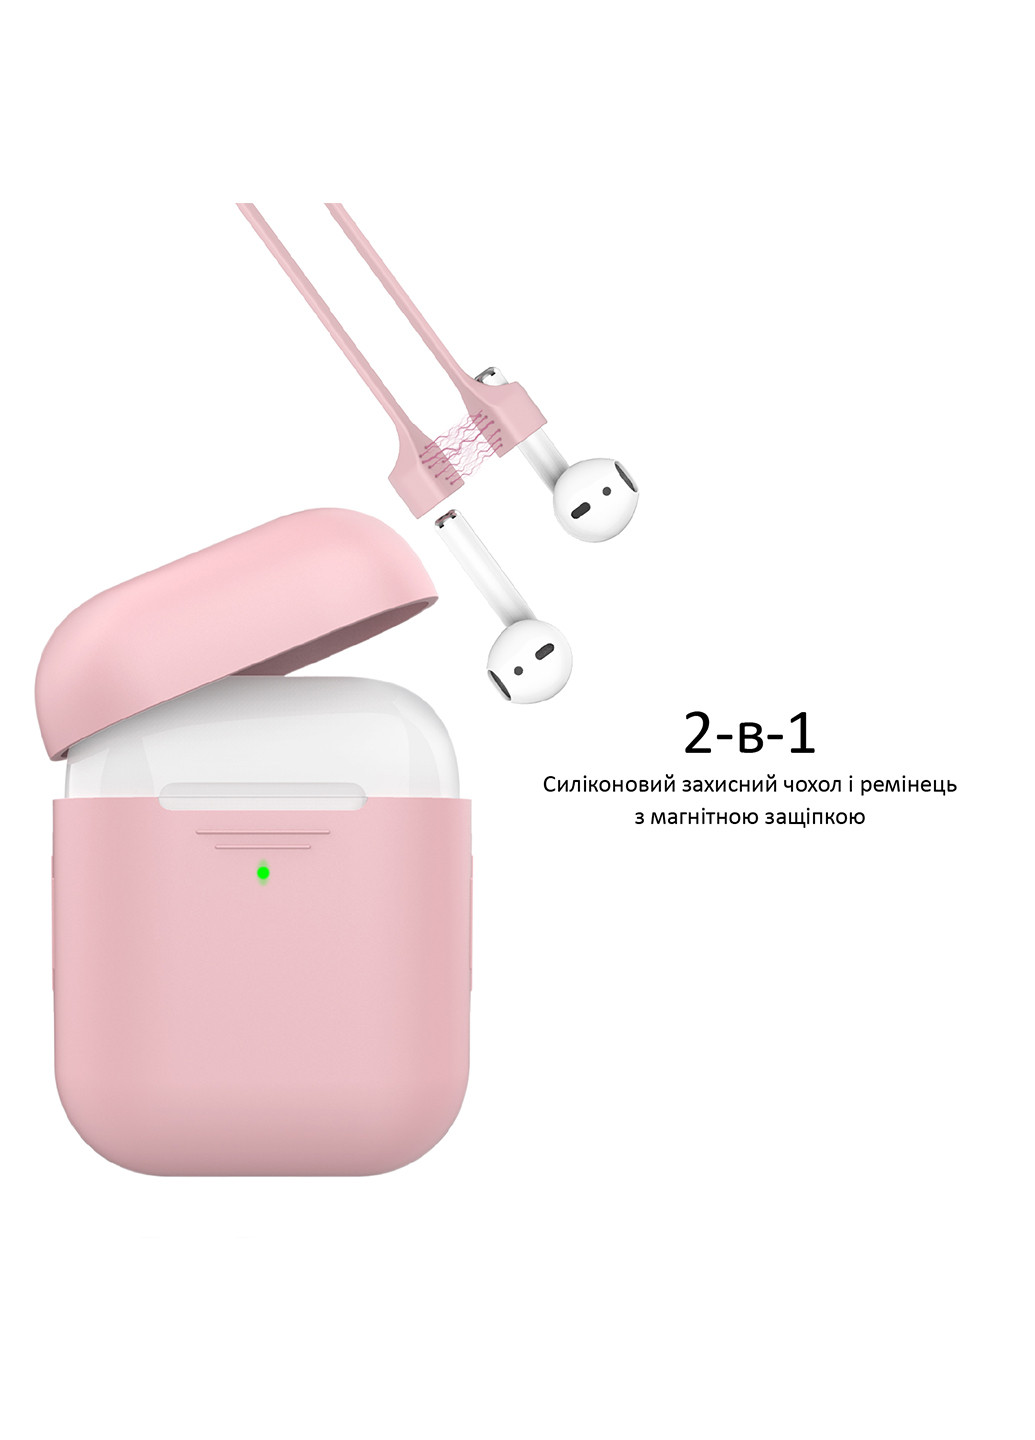 Чехол PodKit для Apple AirPods Pink Promate podkit.pink (188706490)